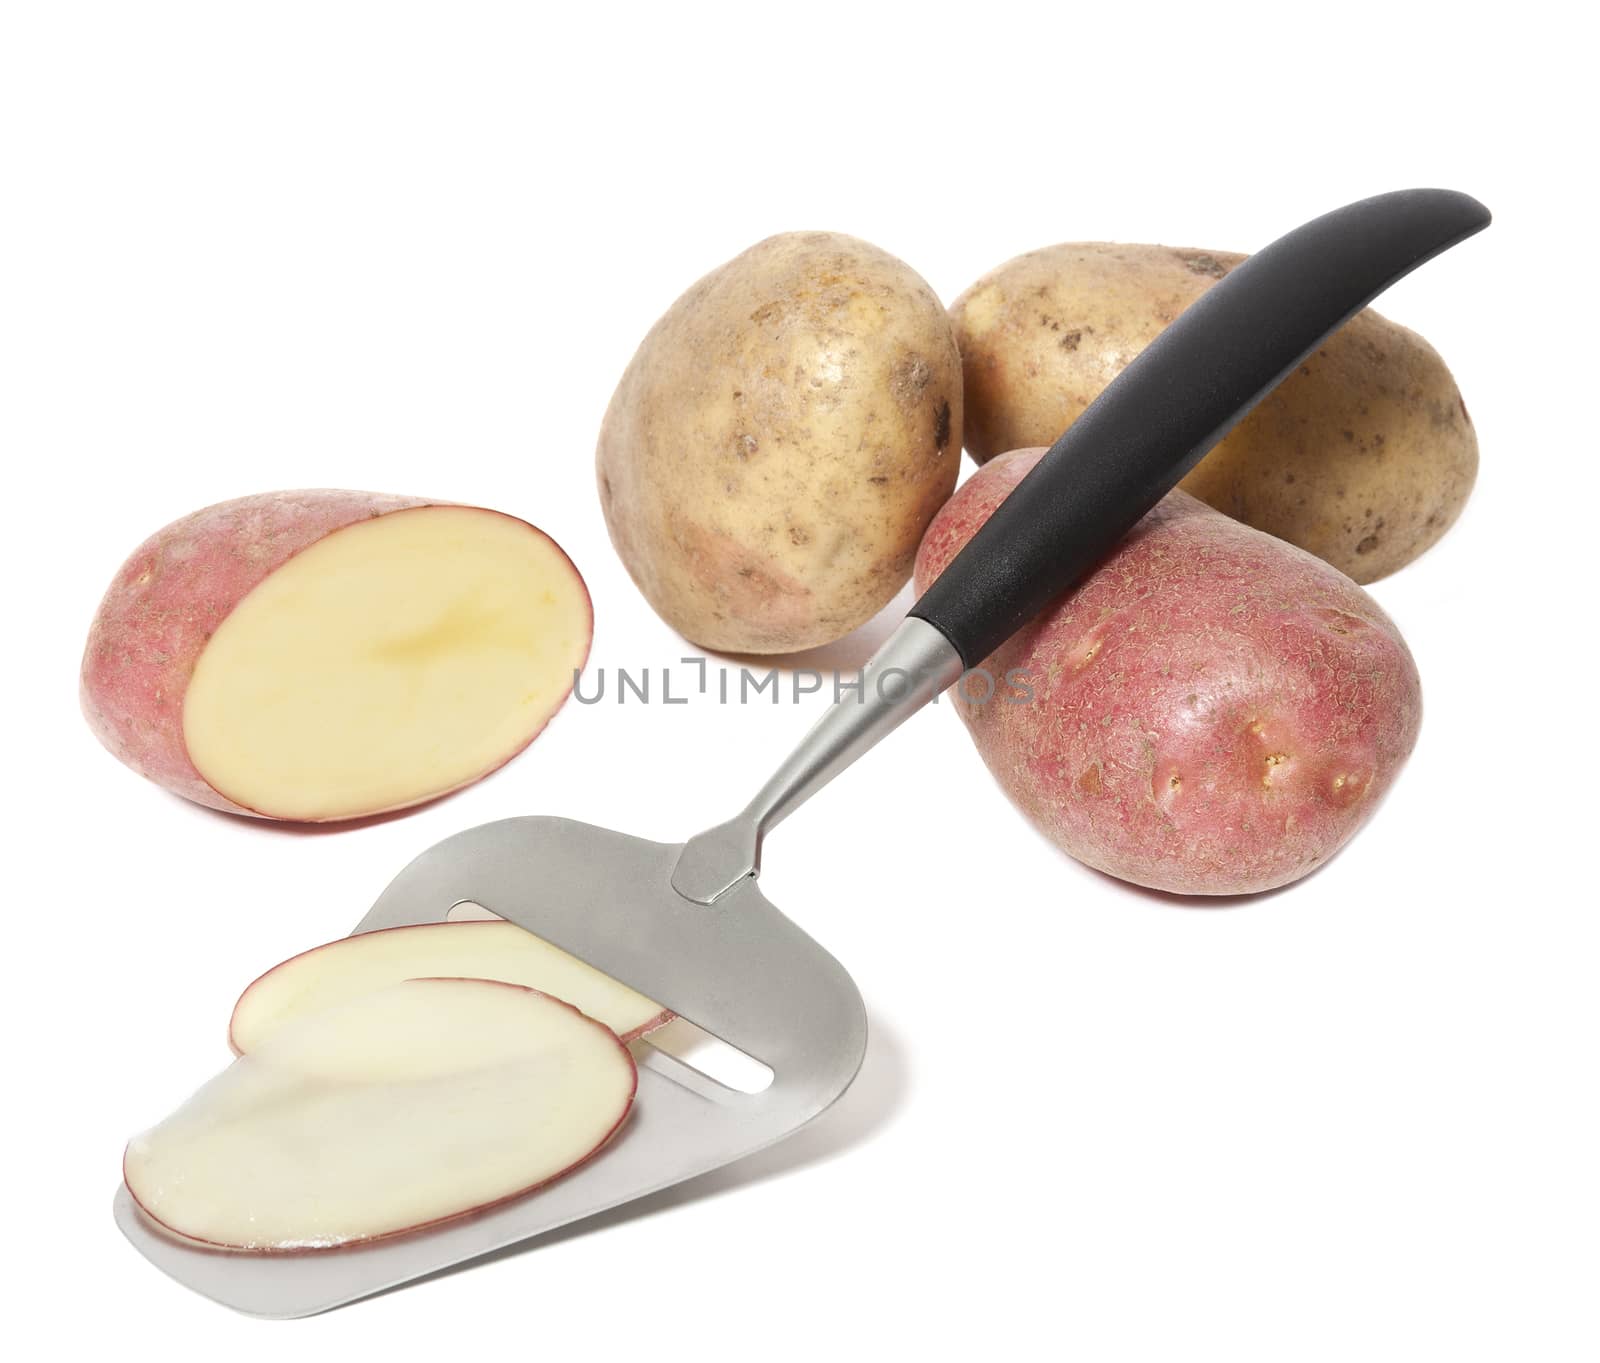 Sliced potatoes by gemenacom